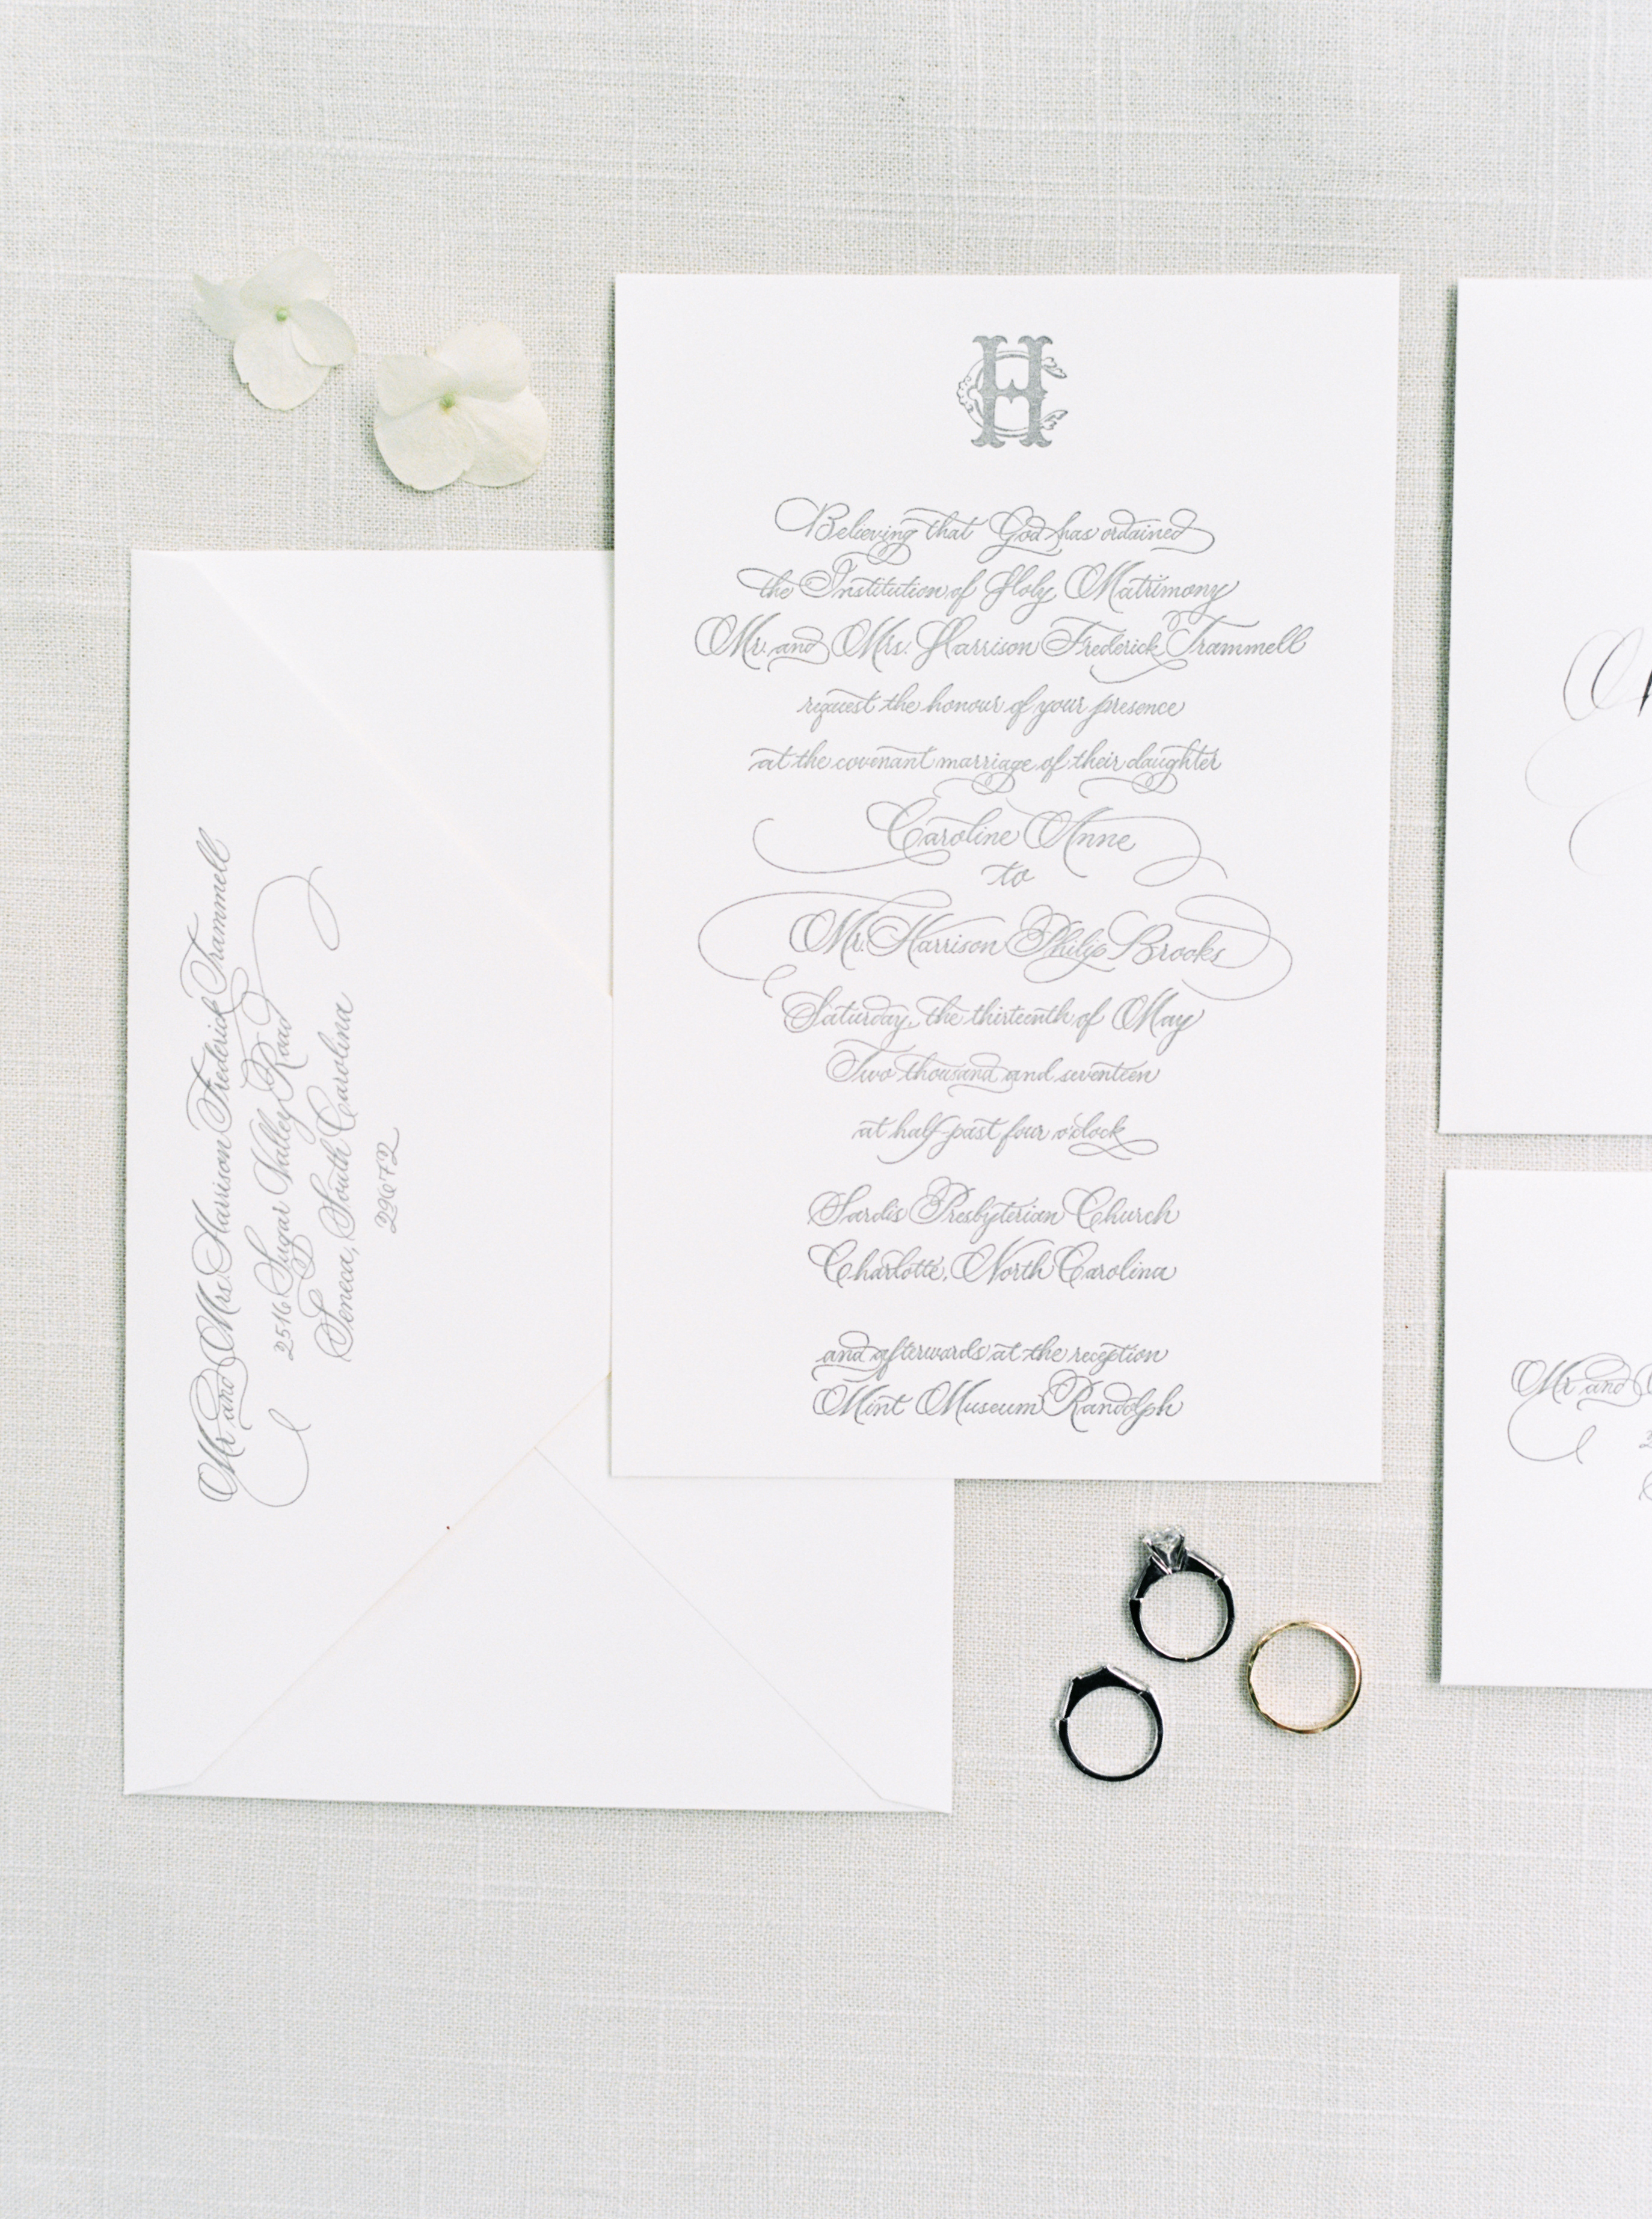 Classic southern wedding invitation calligraphy for North Carolina wedding by Ashlyn Writes Wedding Calligraphy Atlanta Wedding Calligrapher